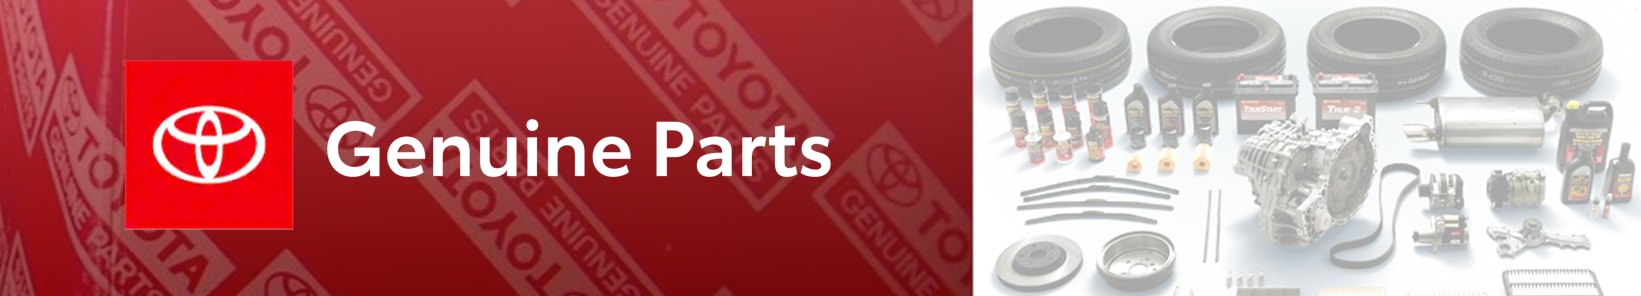 802 Toyota Parts Department